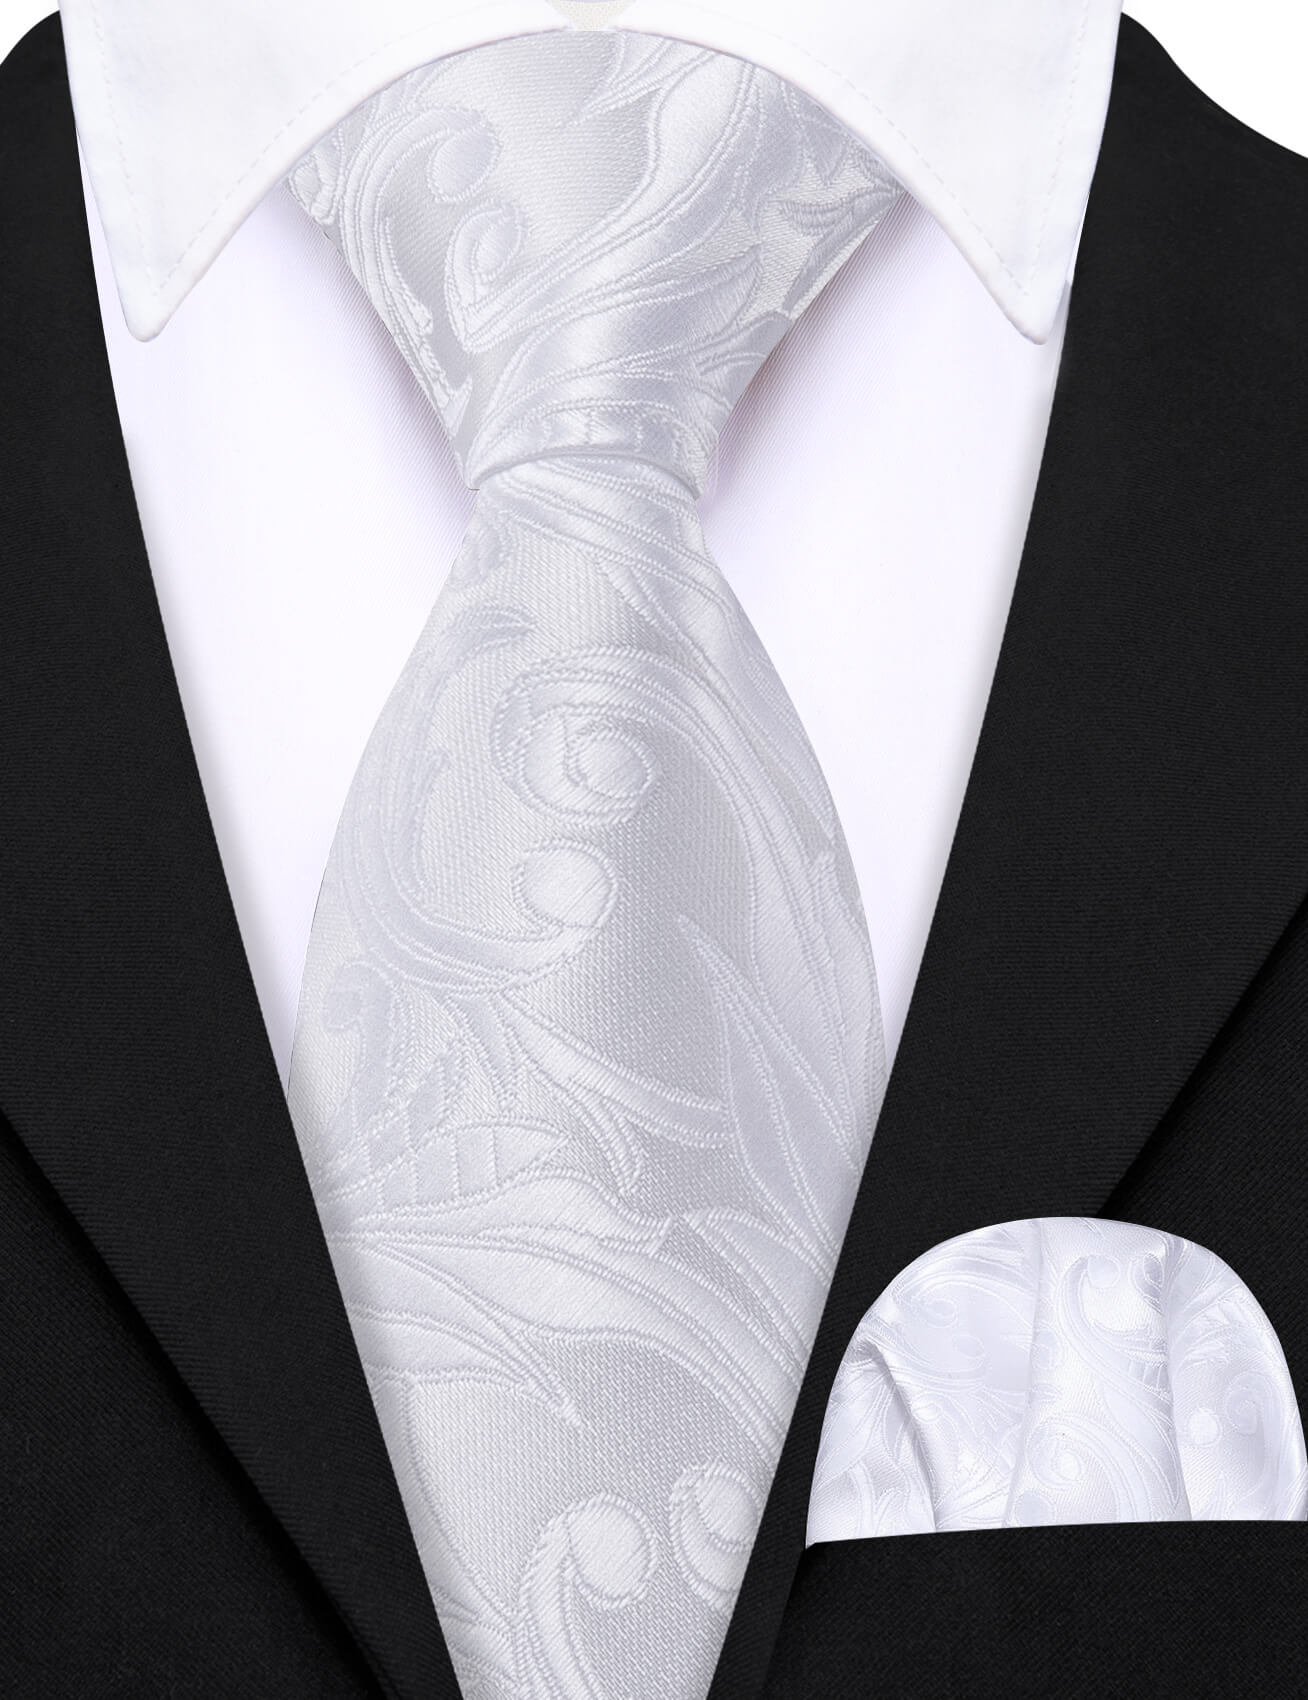 Barry.wang Floral Tie White Jacquard Children's Tie Handkerchief Set